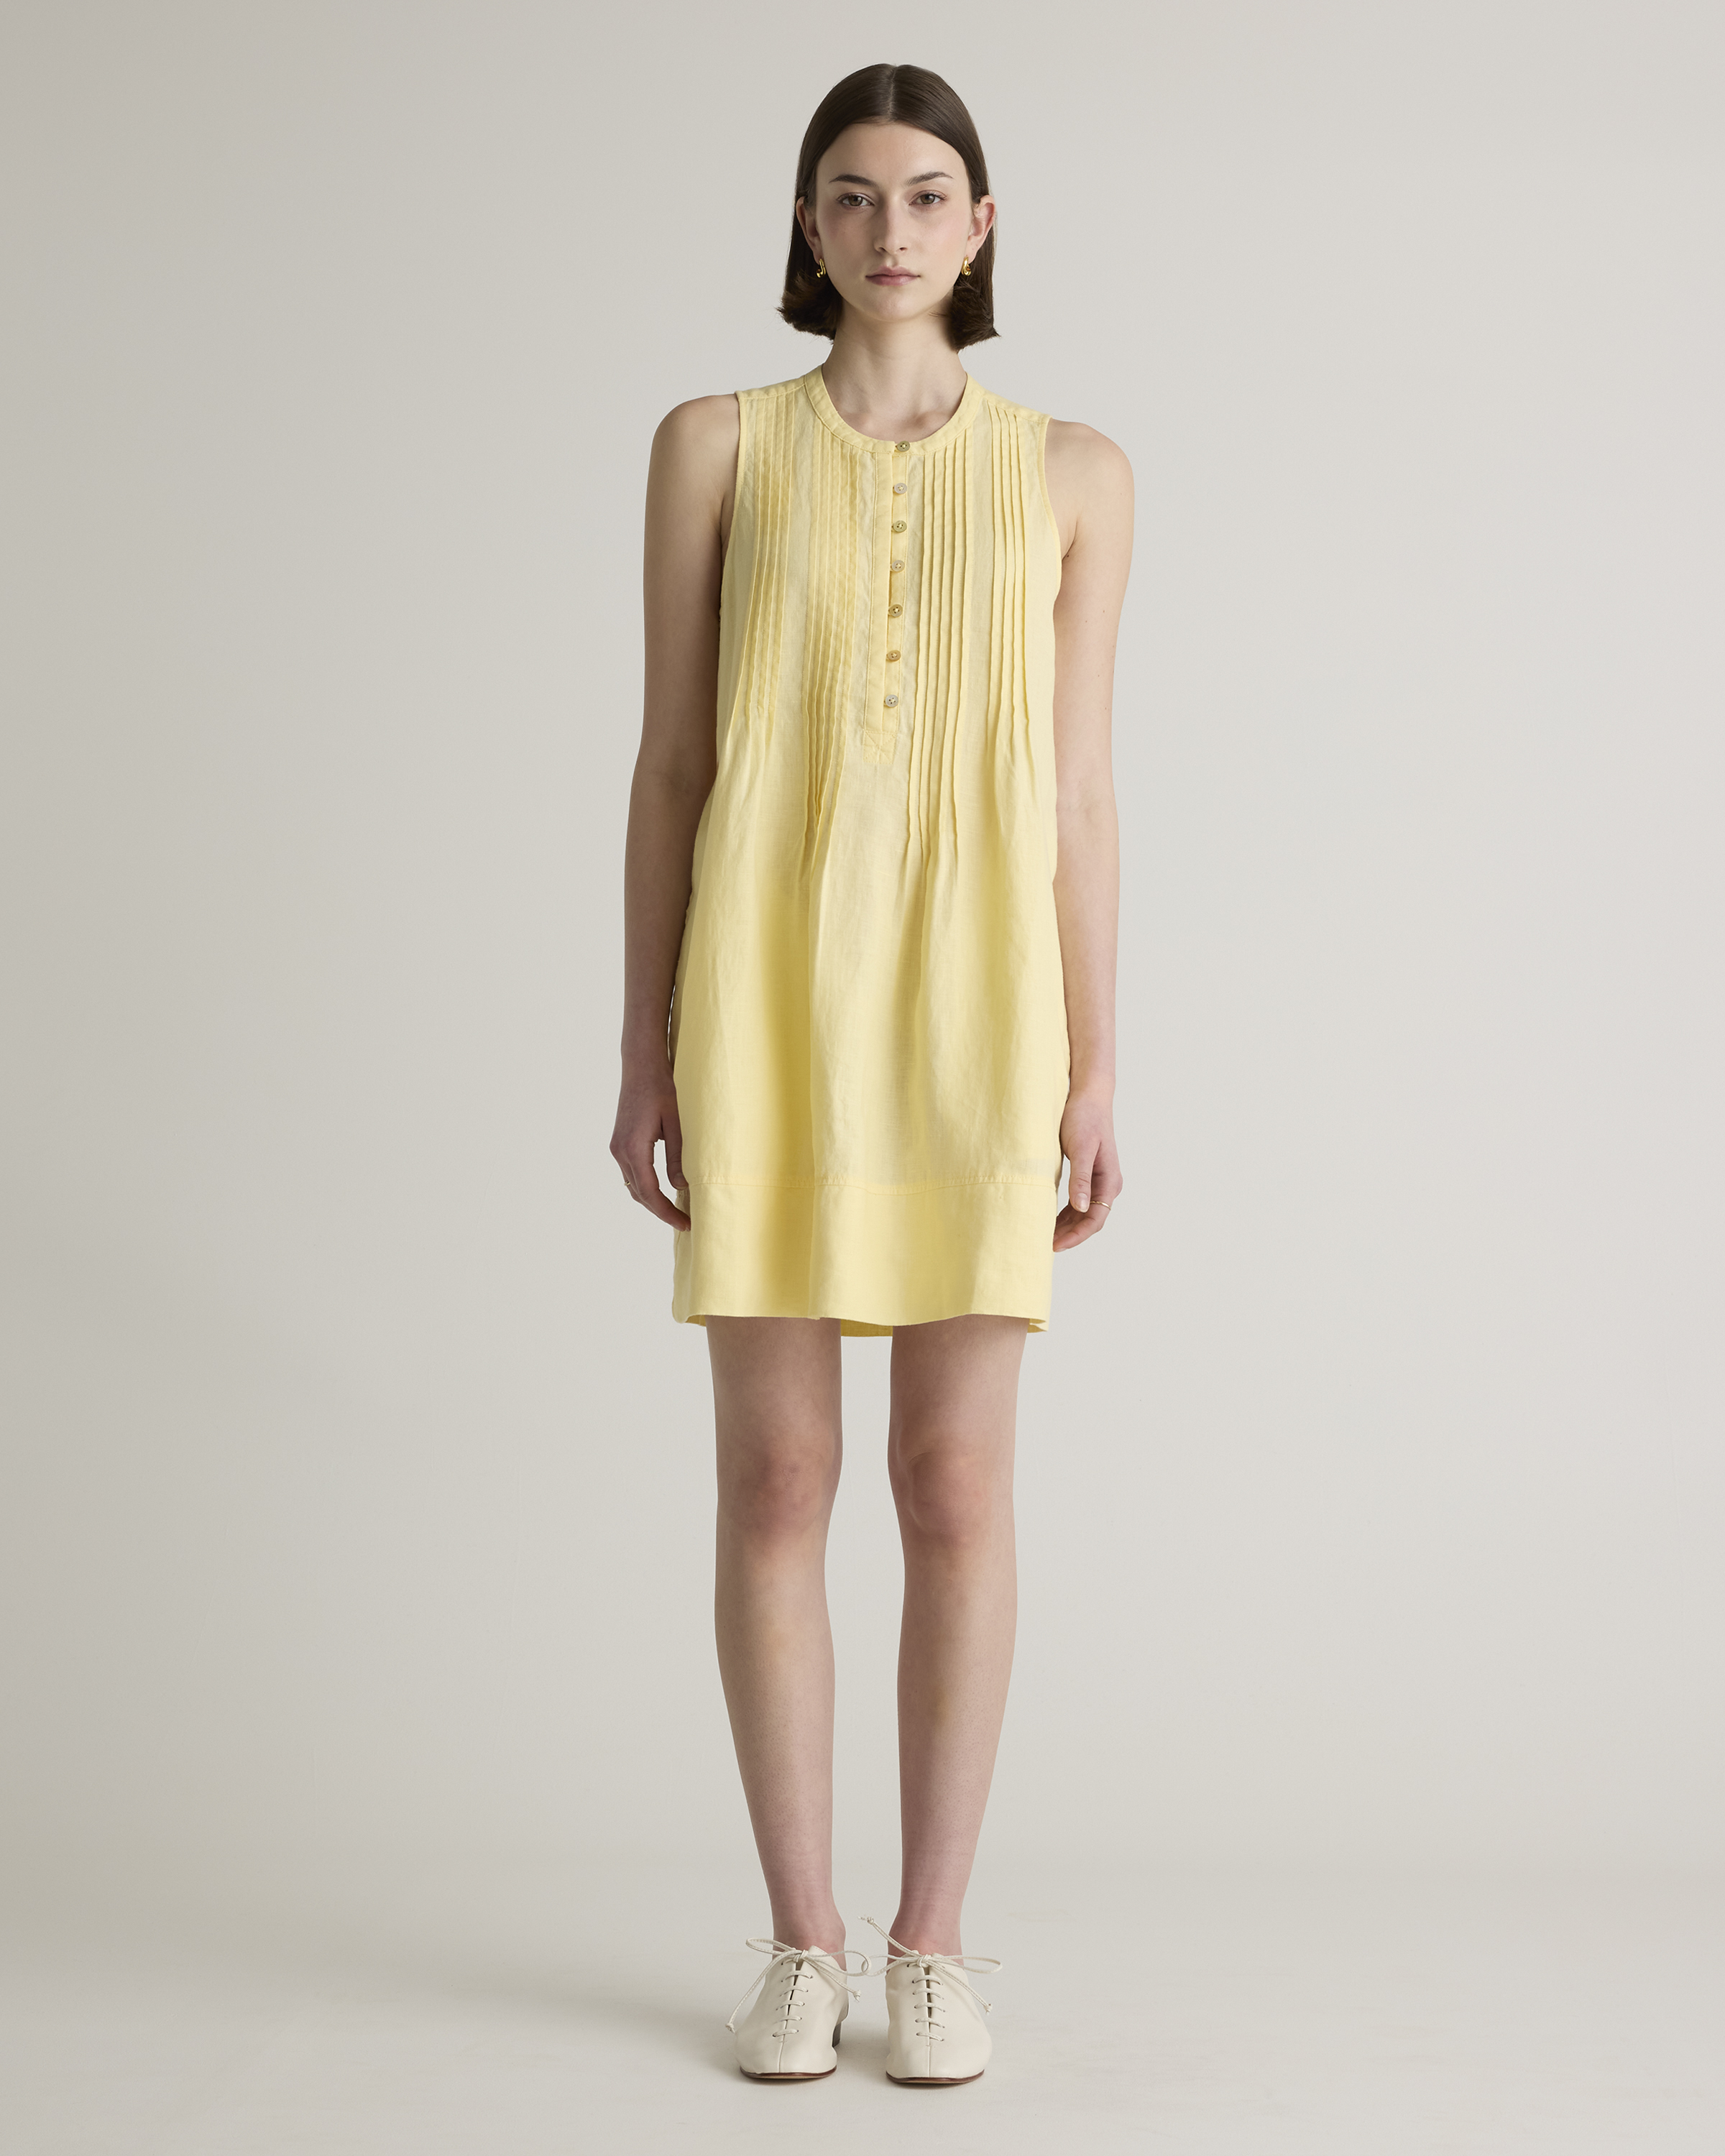 Quince Women's 100% European Linen Sleeveless Swing Dress In Yellow